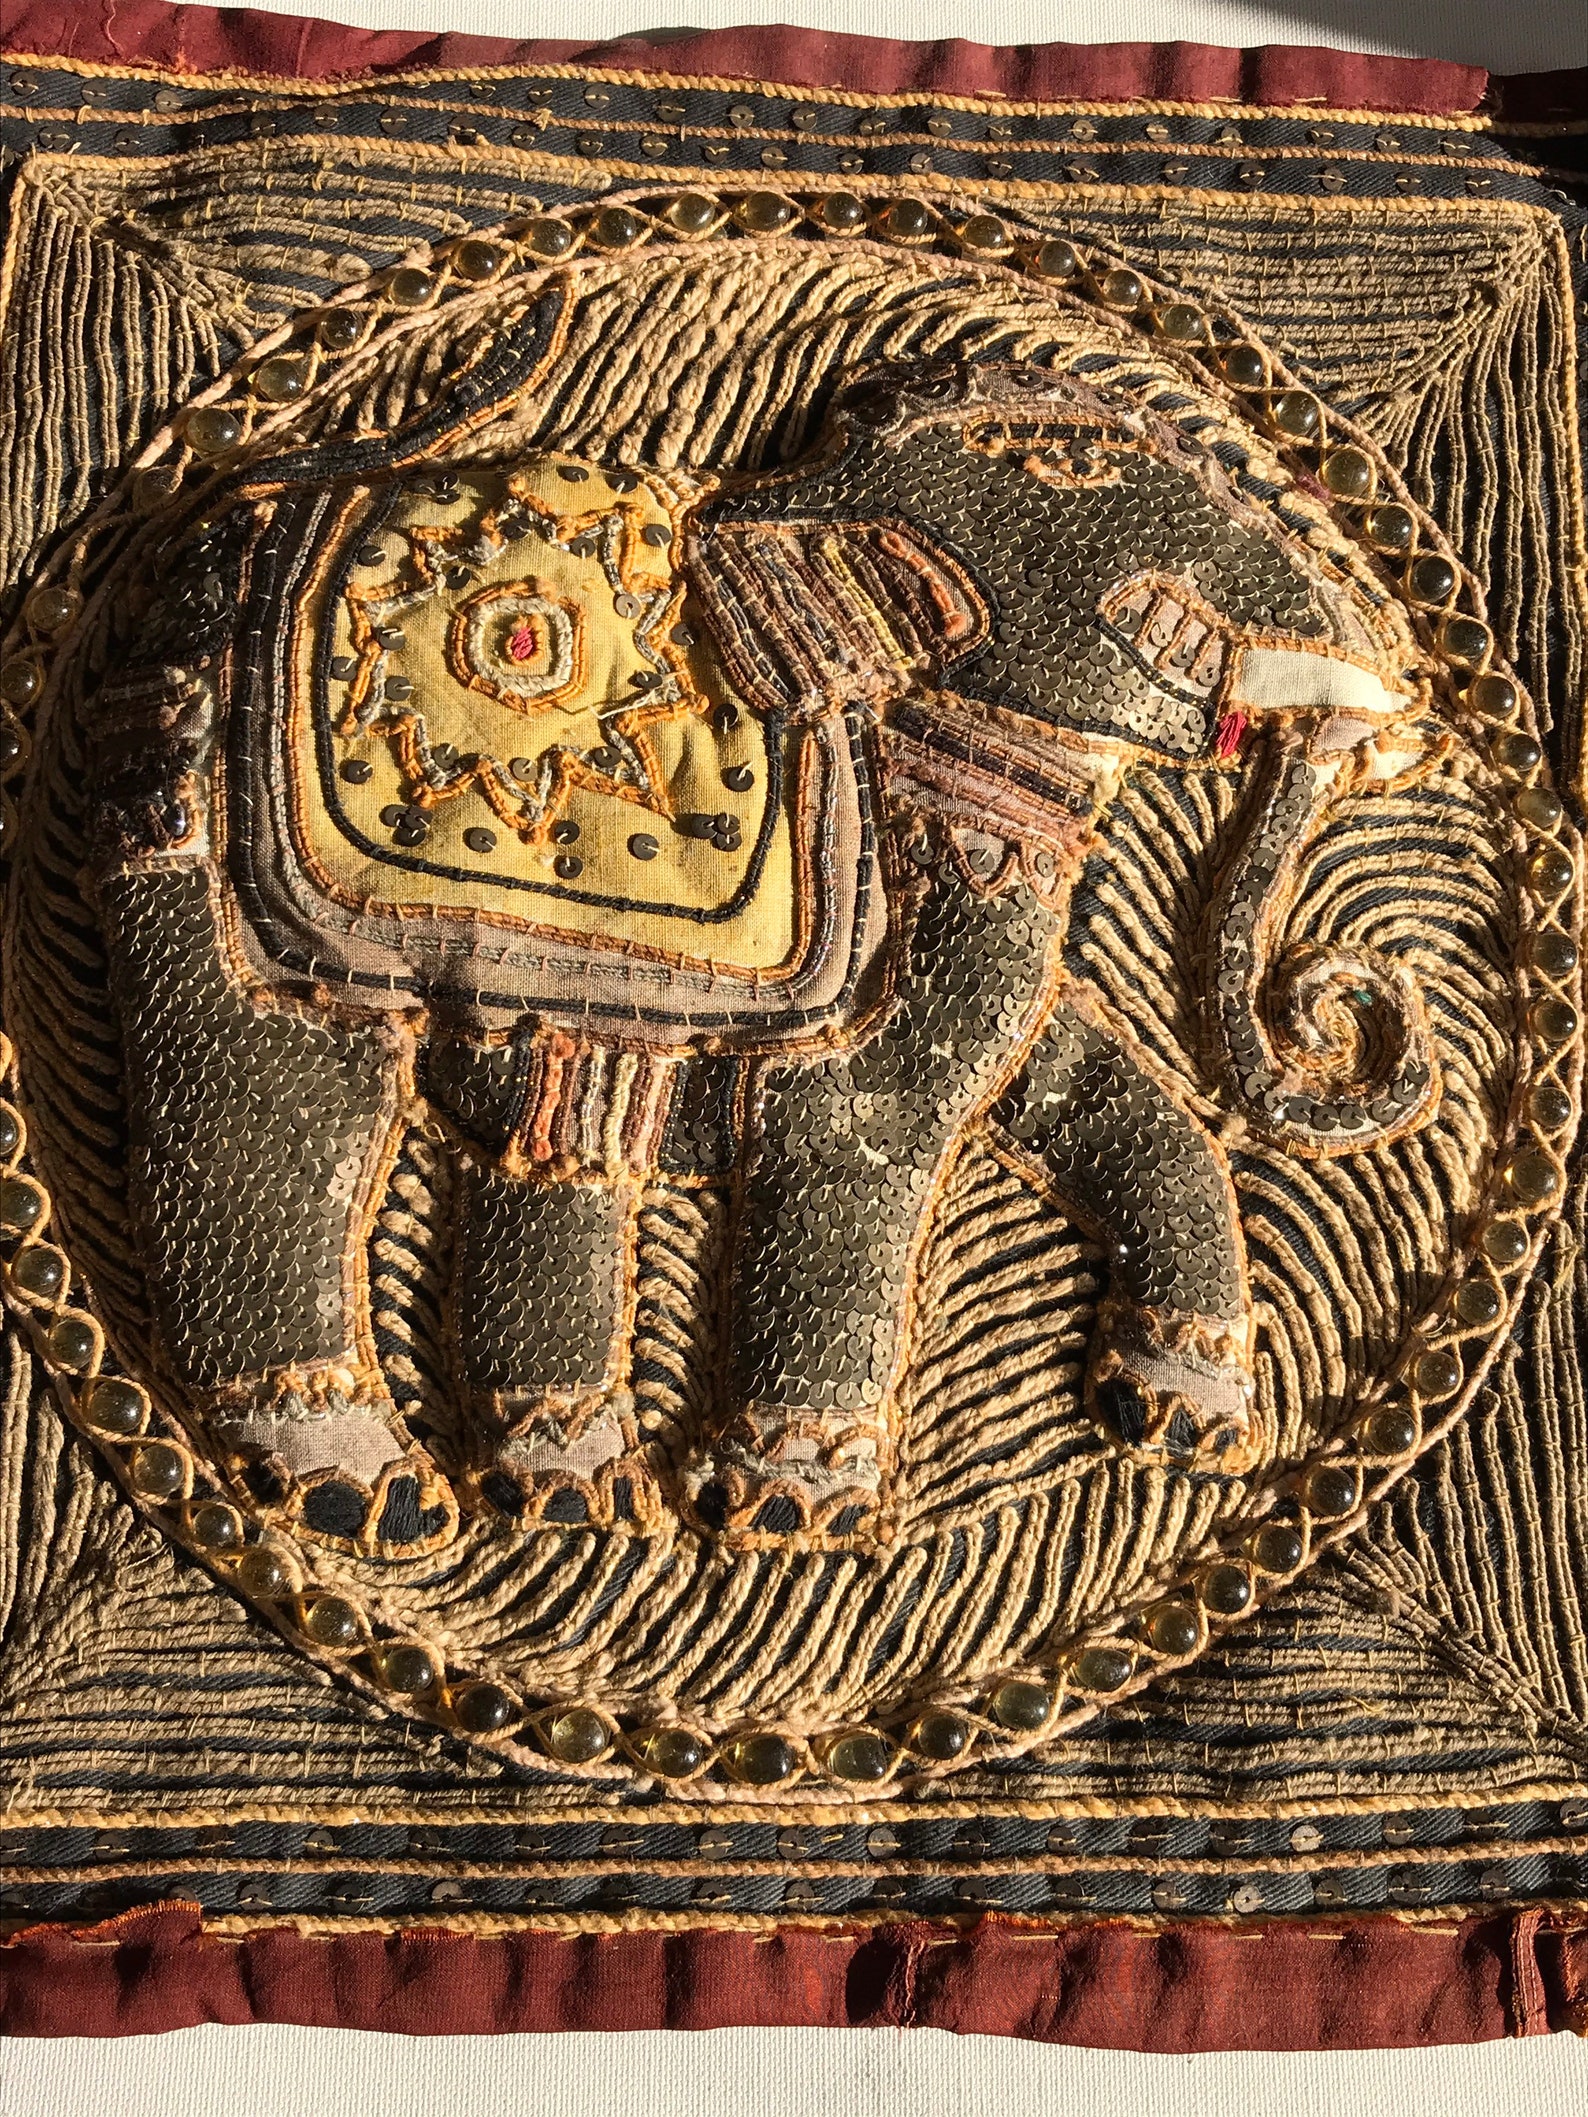 Kalaga Embroidered Textile Elephant Art Burma Myanmar - Etsy UK